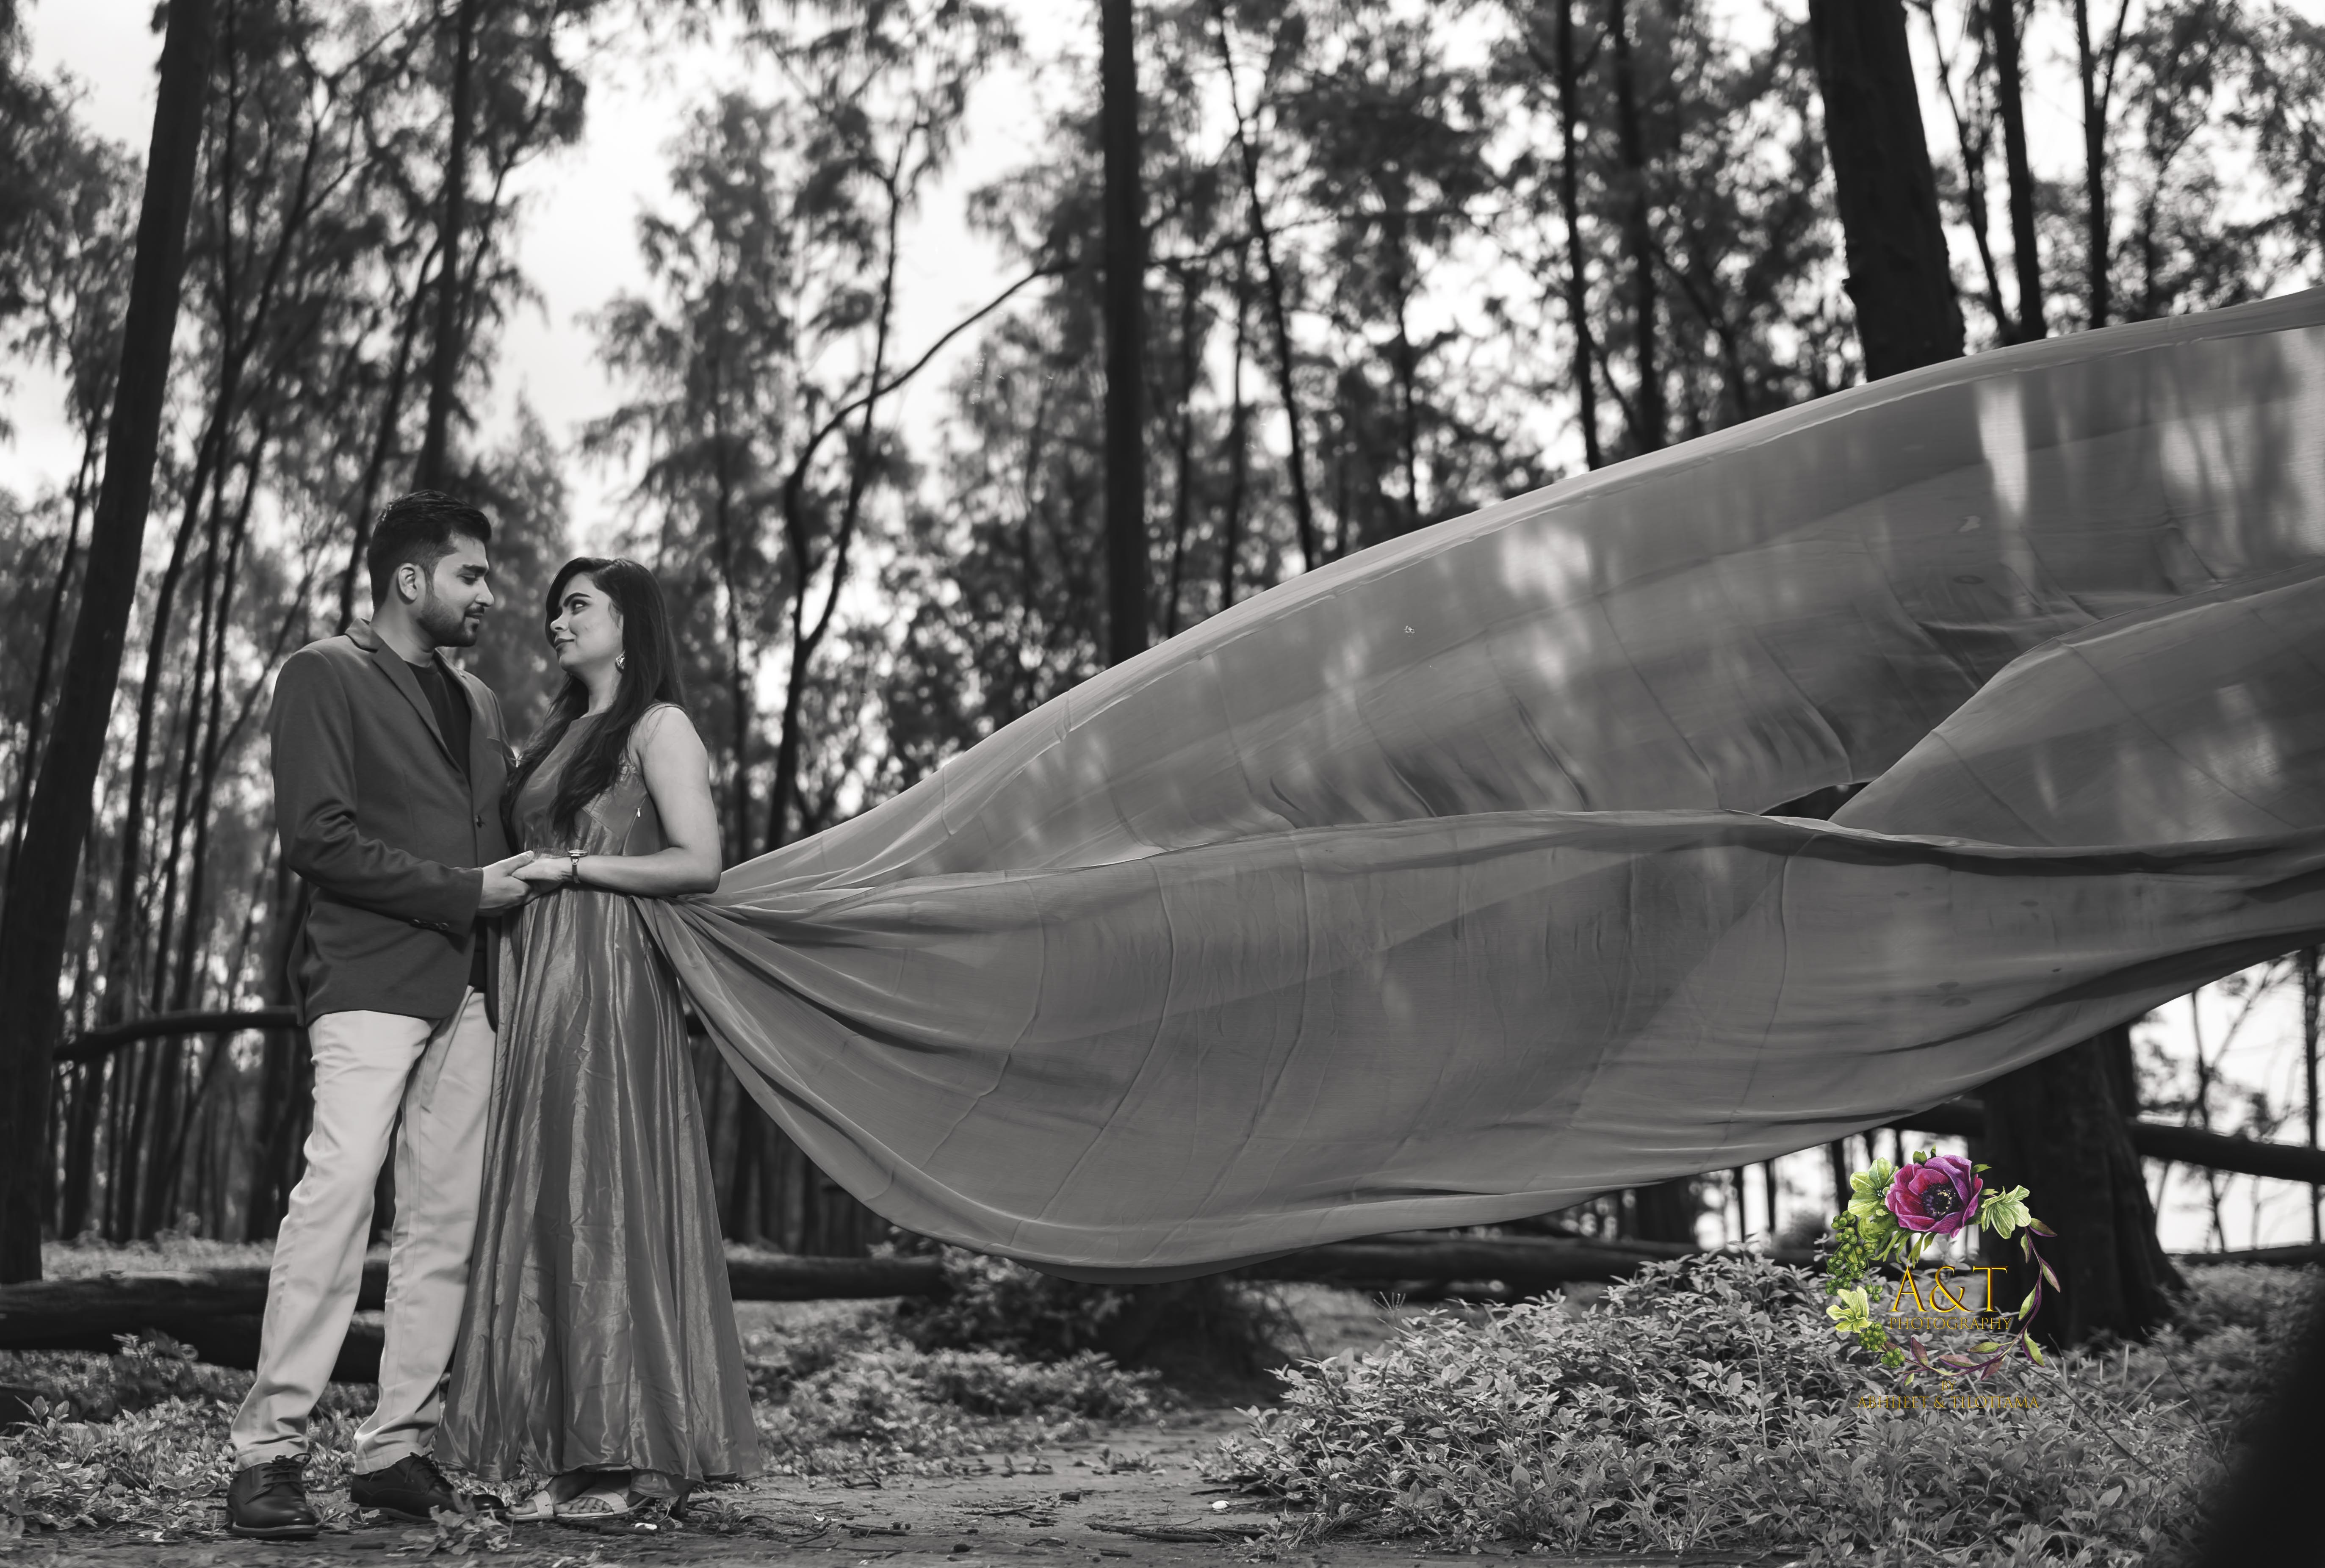 Amazing Black and White Couple Photos from Pre-wedding Photoshoot